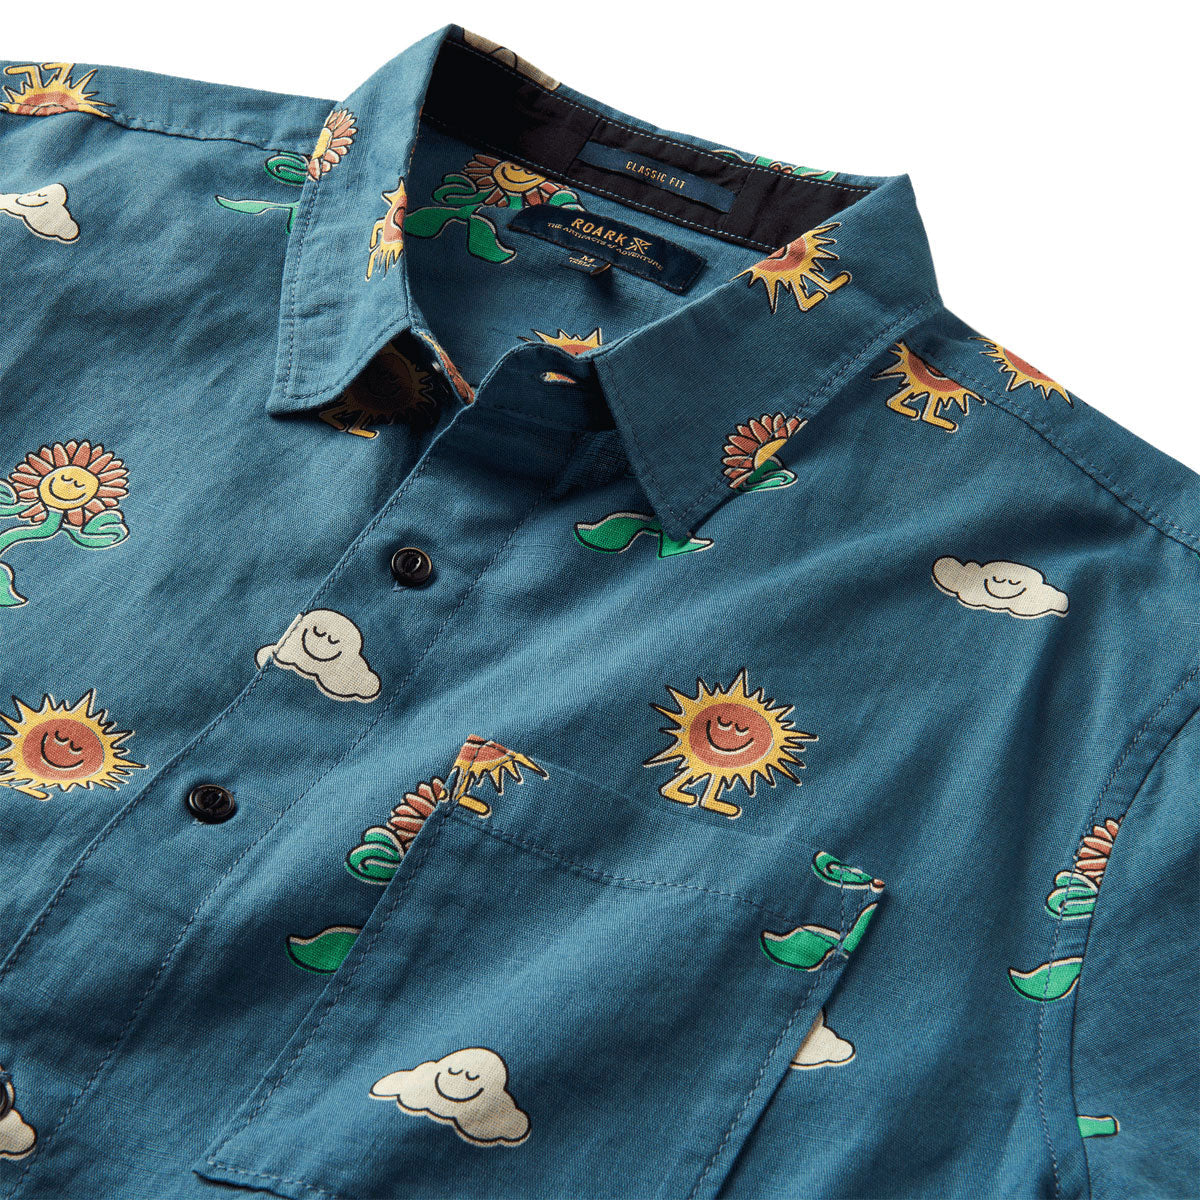 Roark Journey Woven Shirt - Smeralda Costa image 5